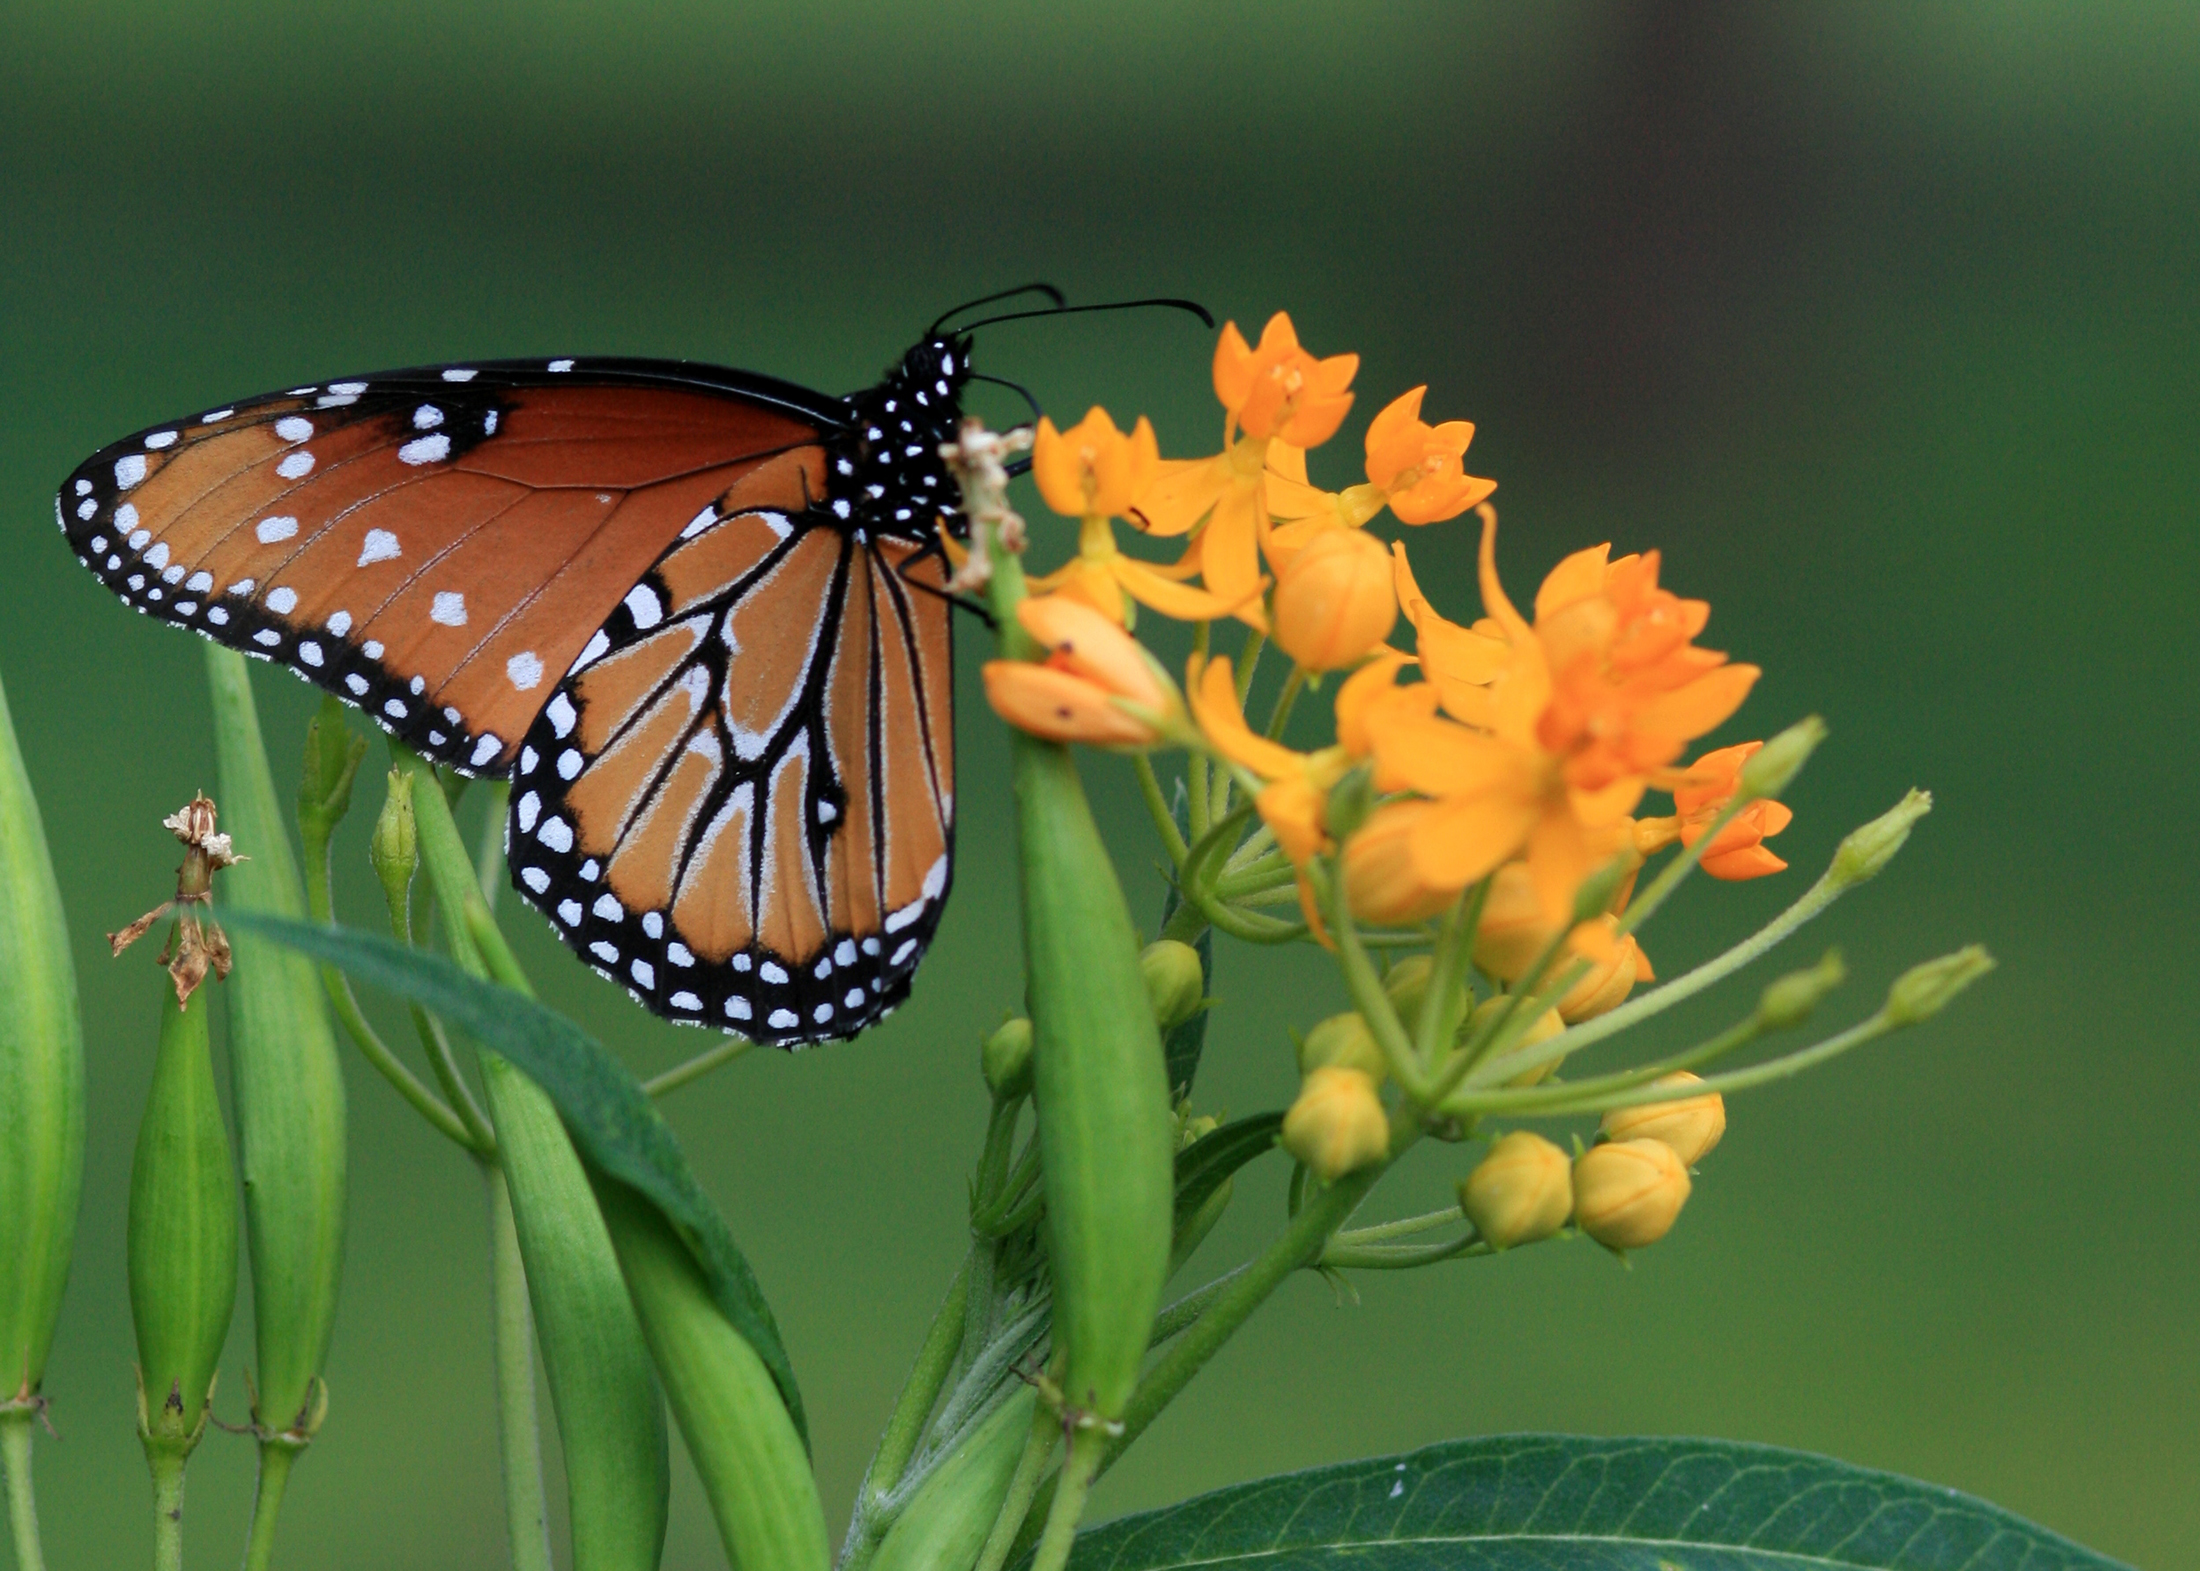 Eastern monarch butterfly population plunges below extinction threshold